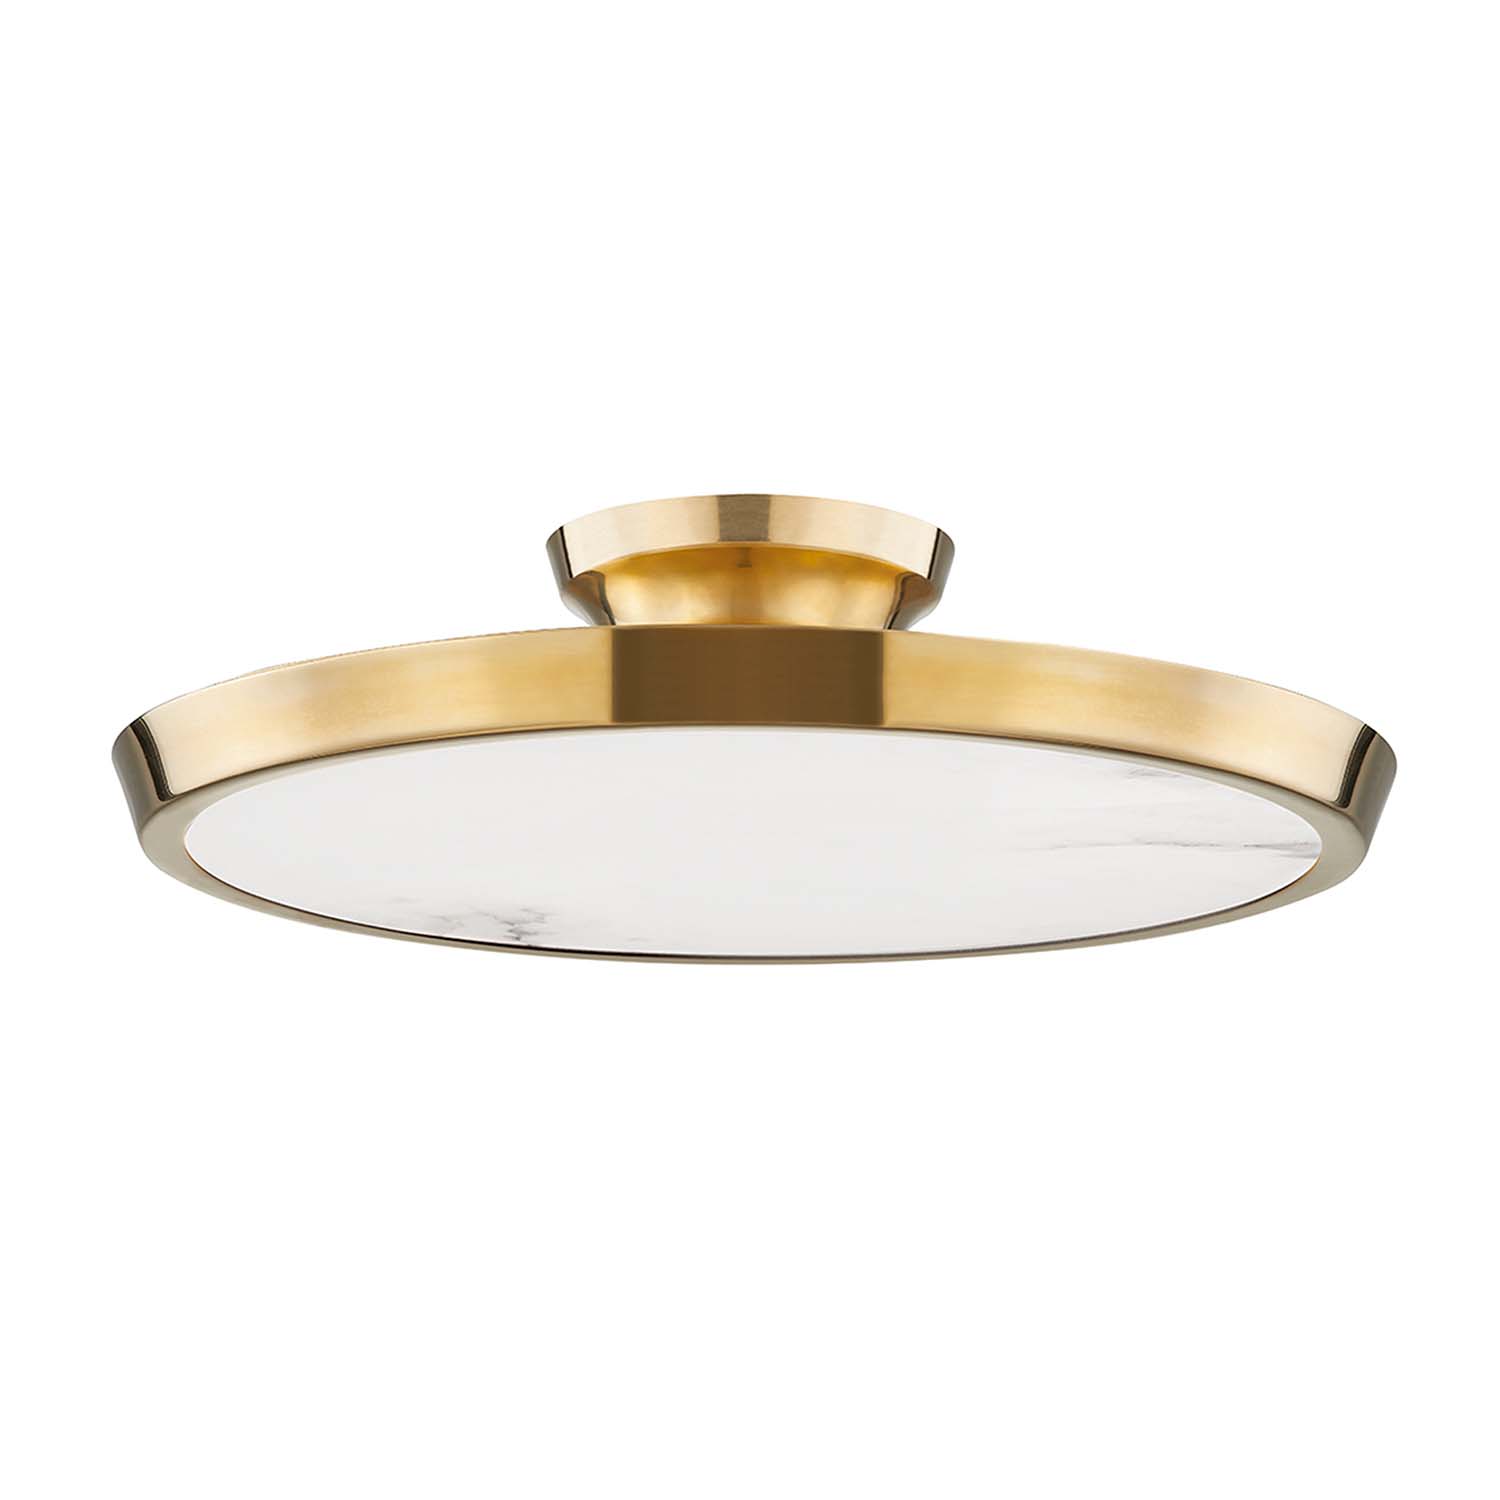 DRAPER - Art Deco Gold and Marble Circular Ceiling Light